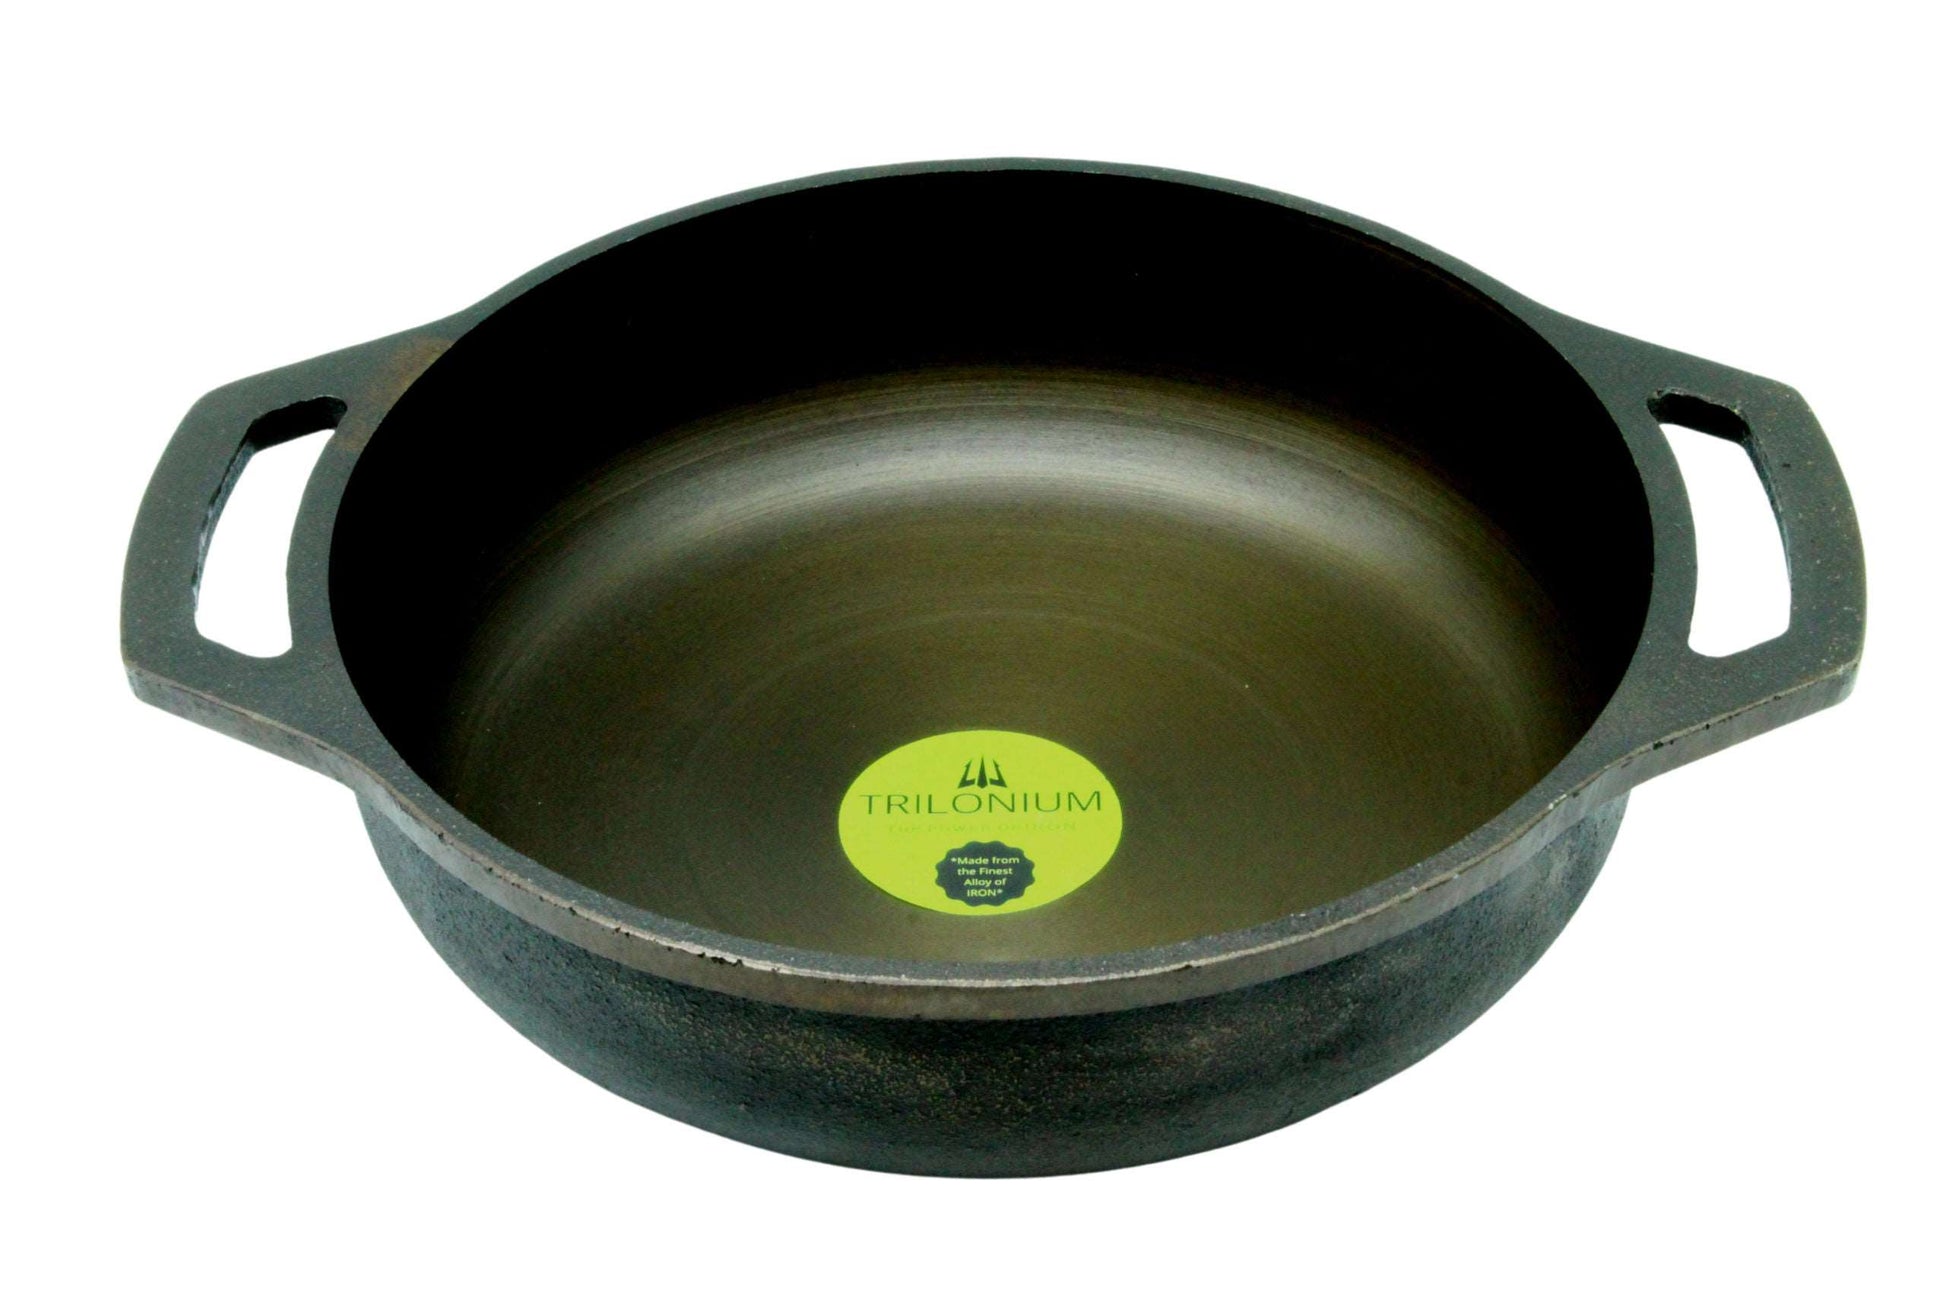 Cast Iron Cookware - 8.2 Inch Pre-Seasoned Kadai - Healthy and